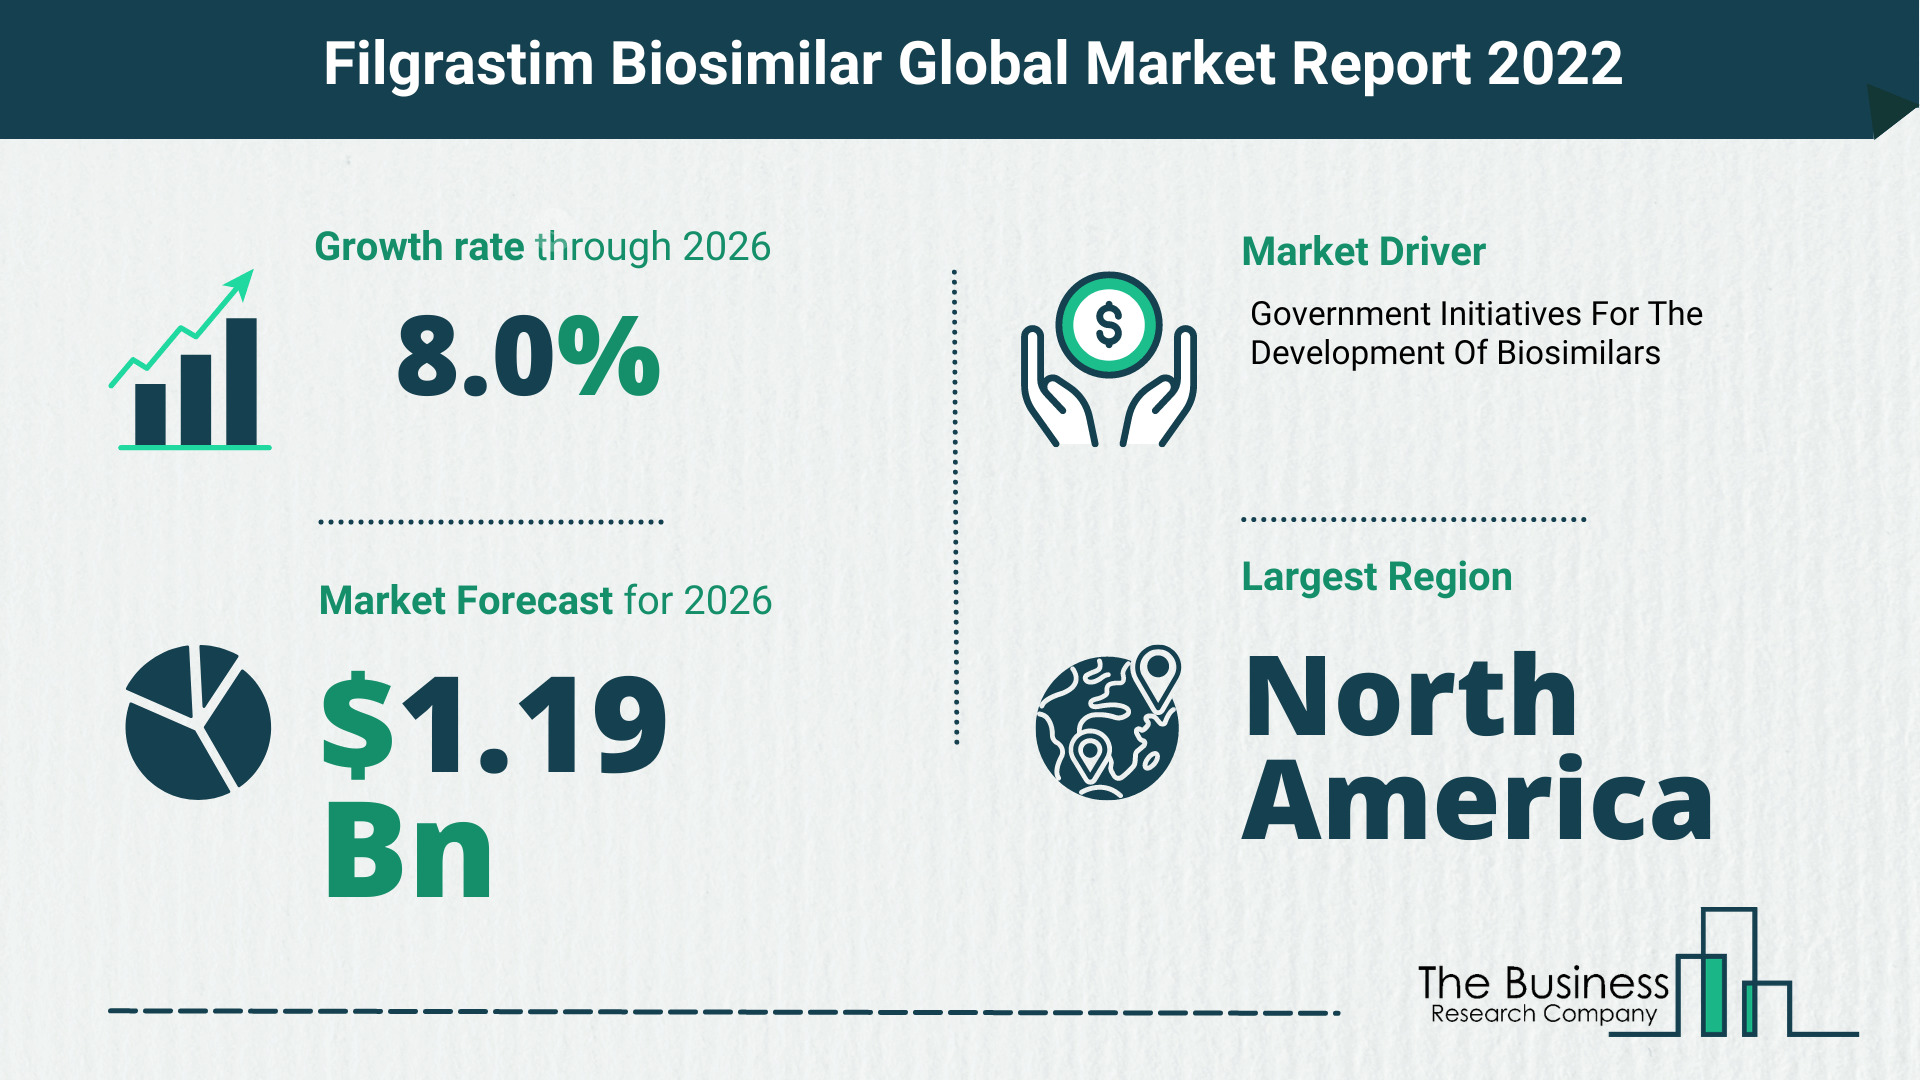 Global Filgrastim Biosimilar Market